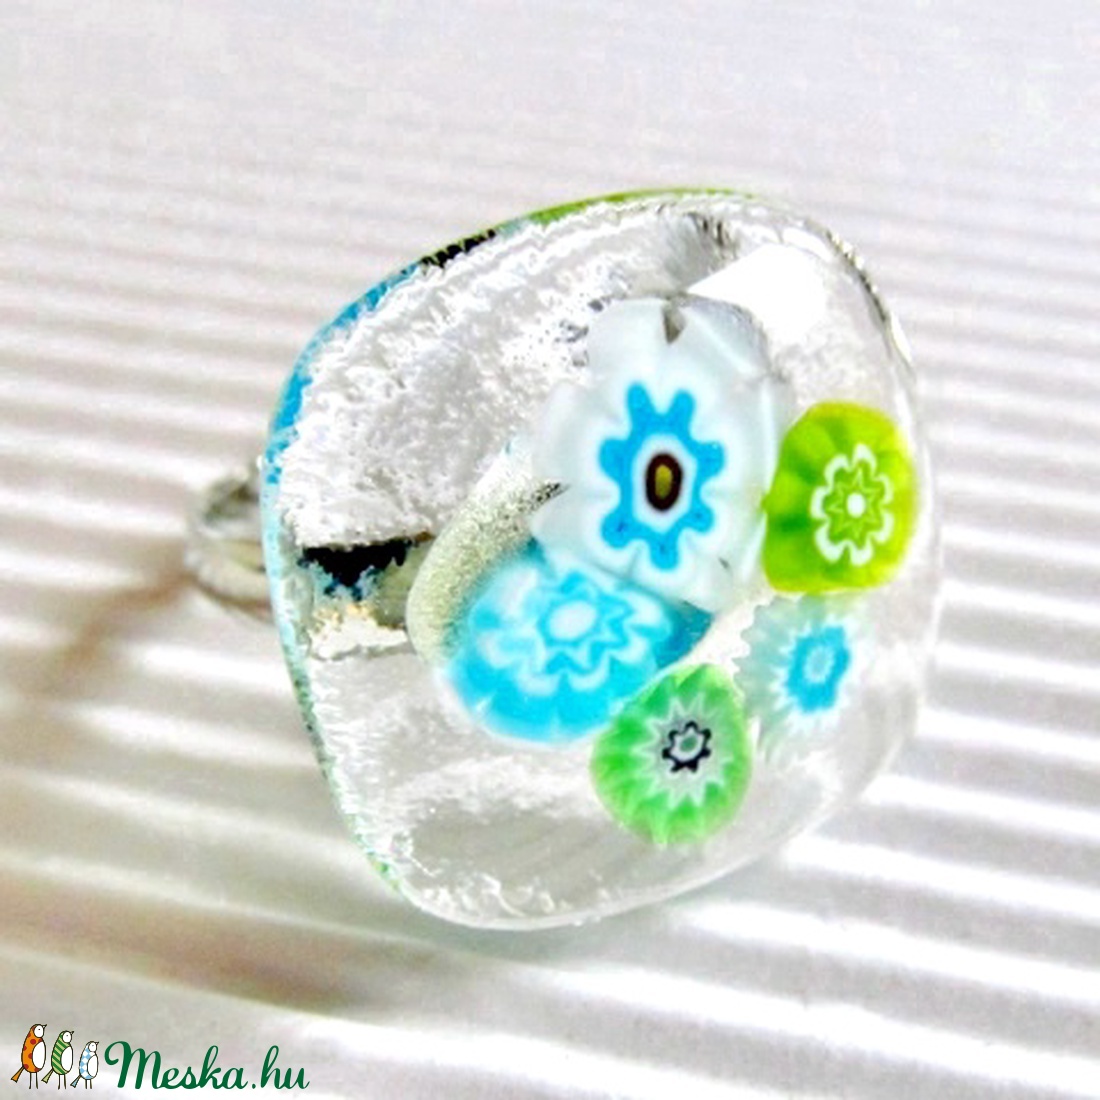 Tavaszi türkiz-almazöld virágtenger üveg gyűrű, millefiori, virág, üvegékszer - ékszer - gyűrű - statement gyűrű - Meska.hu